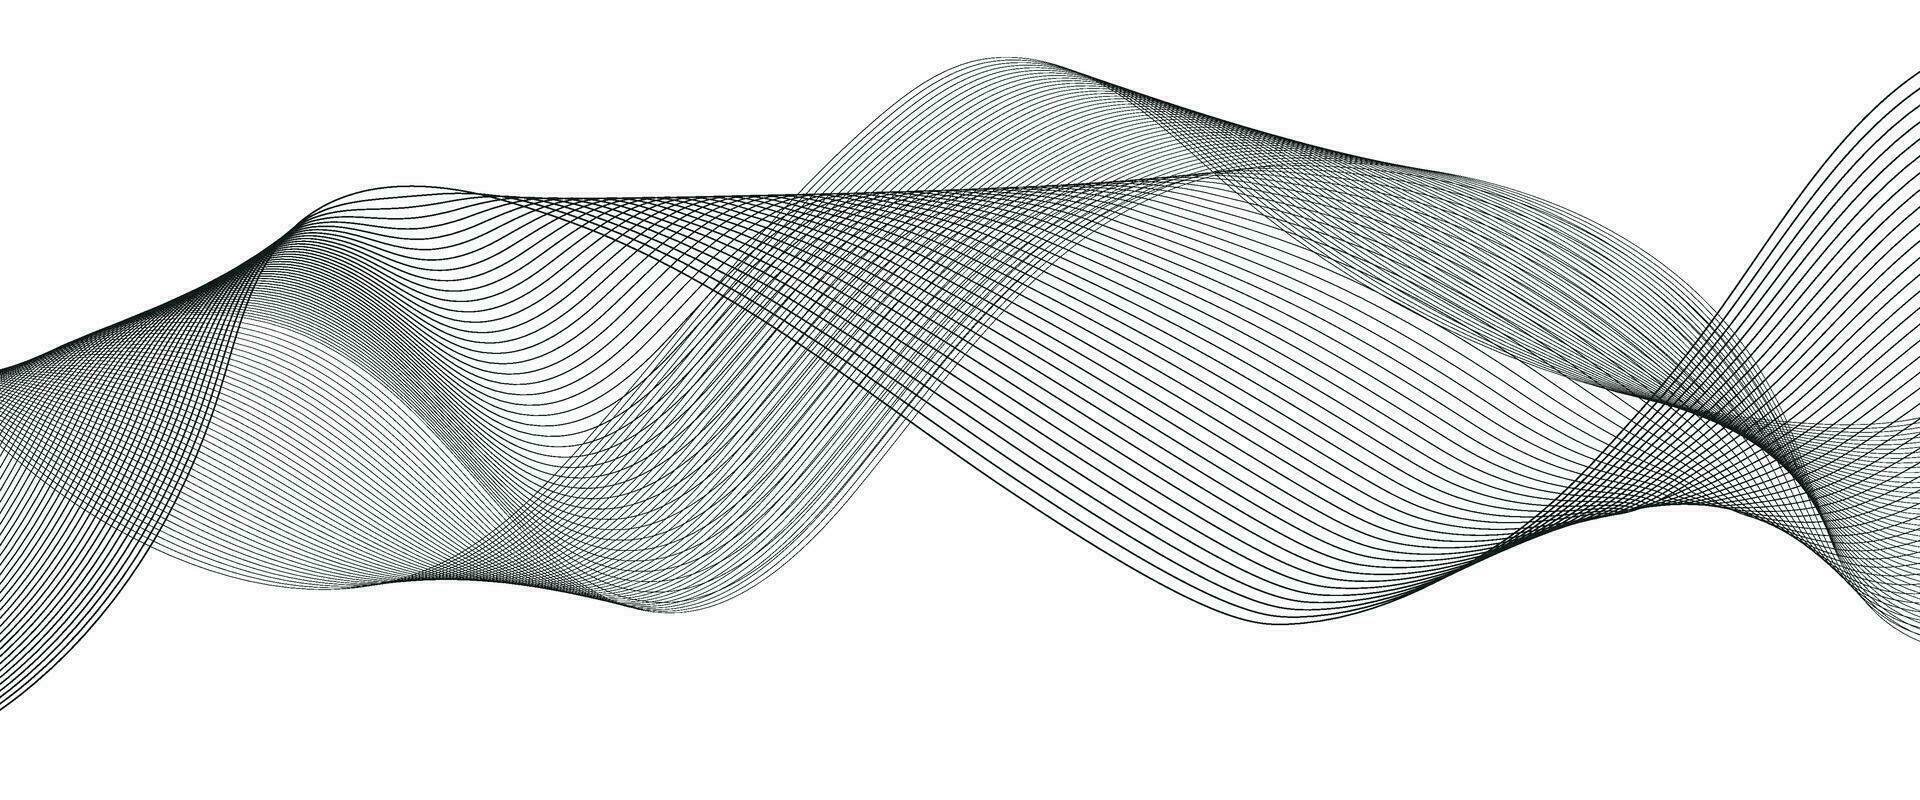 abstrakt ljus Vinka isolerat på vit bakgrund. bakgrund design med diagonal linje mönster i grå Färg. grå och vit abstrakt bakgrund med strömmande vågor. vektor